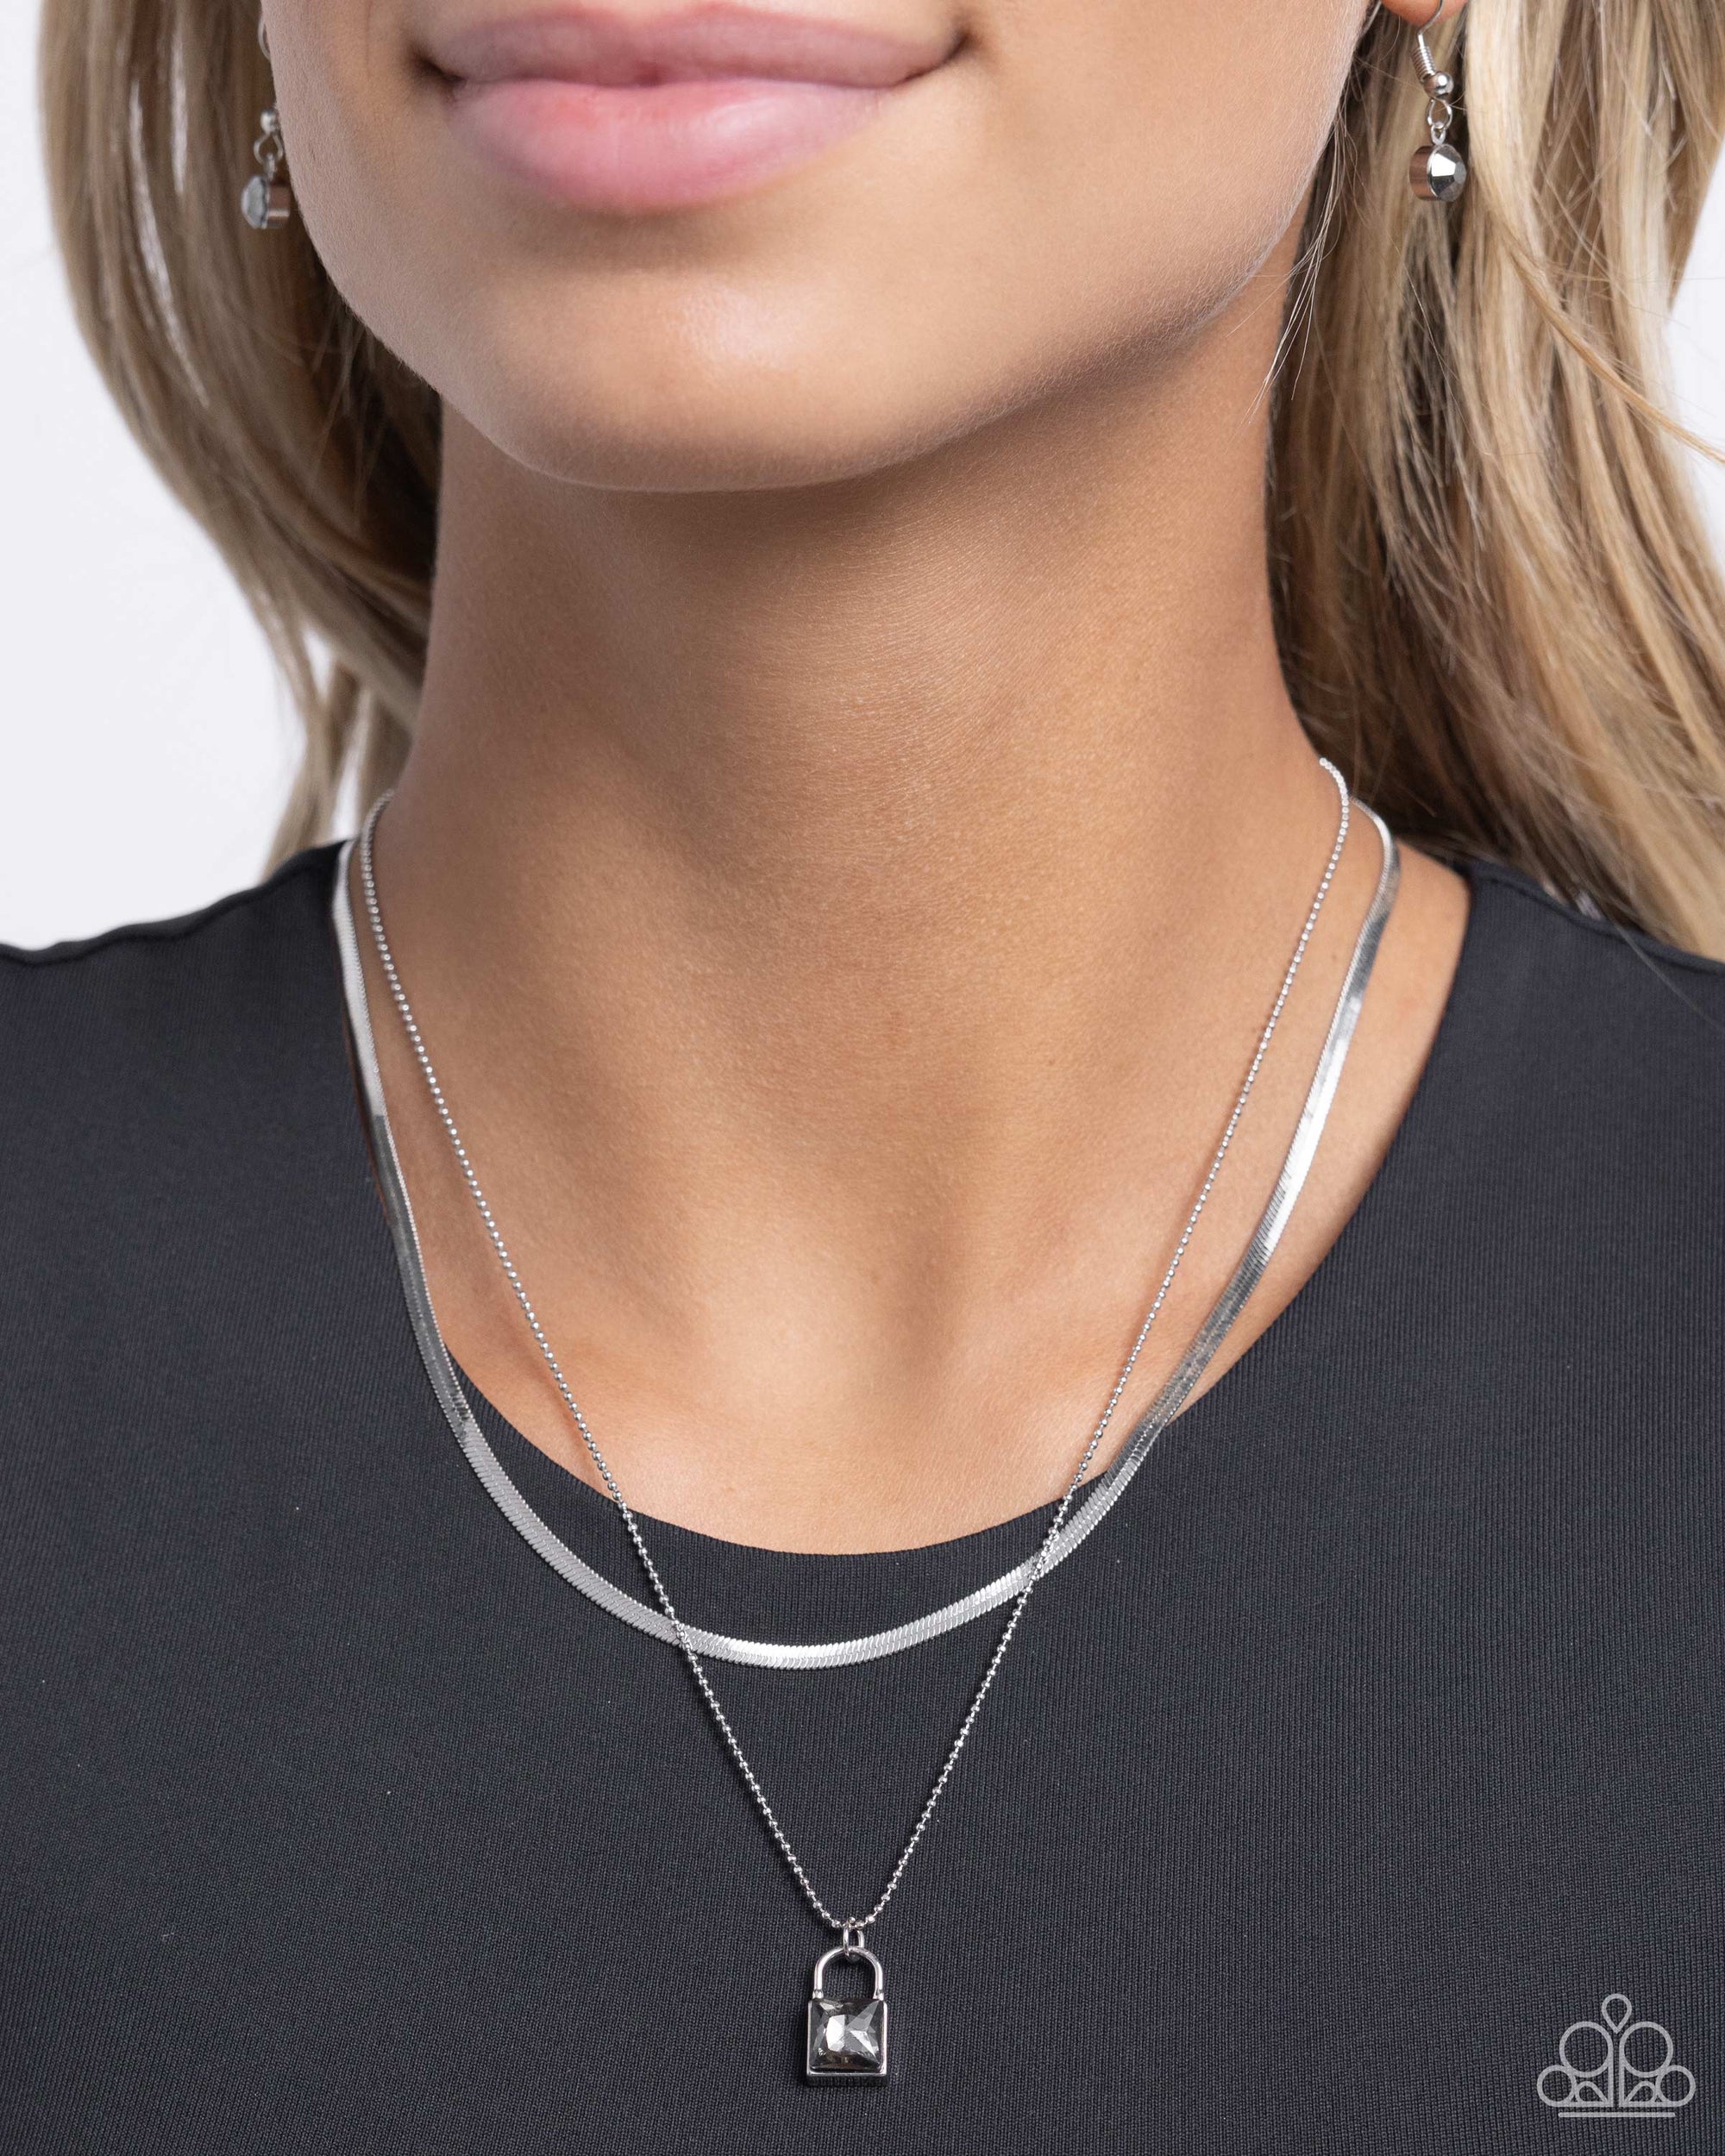 Padlock Possession Silver Rhinestone Necklace - Paparazzi Accessories- lightbox - CarasShop.com - $5 Jewelry by Cara Jewels